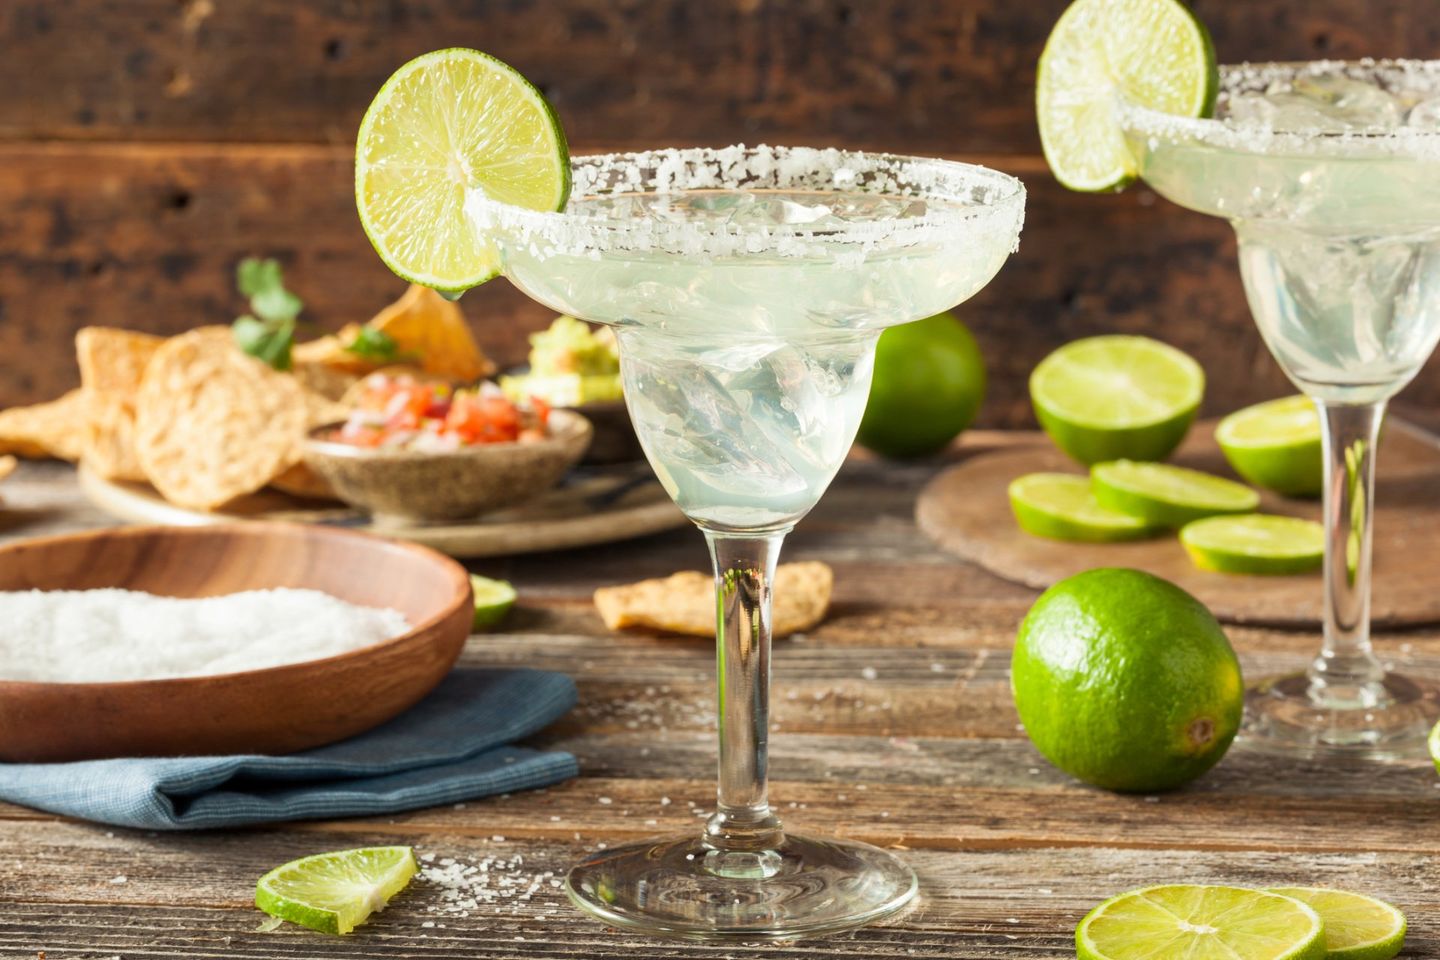 Margaritas — Authentic Mexican Drink in Sacramento, CA